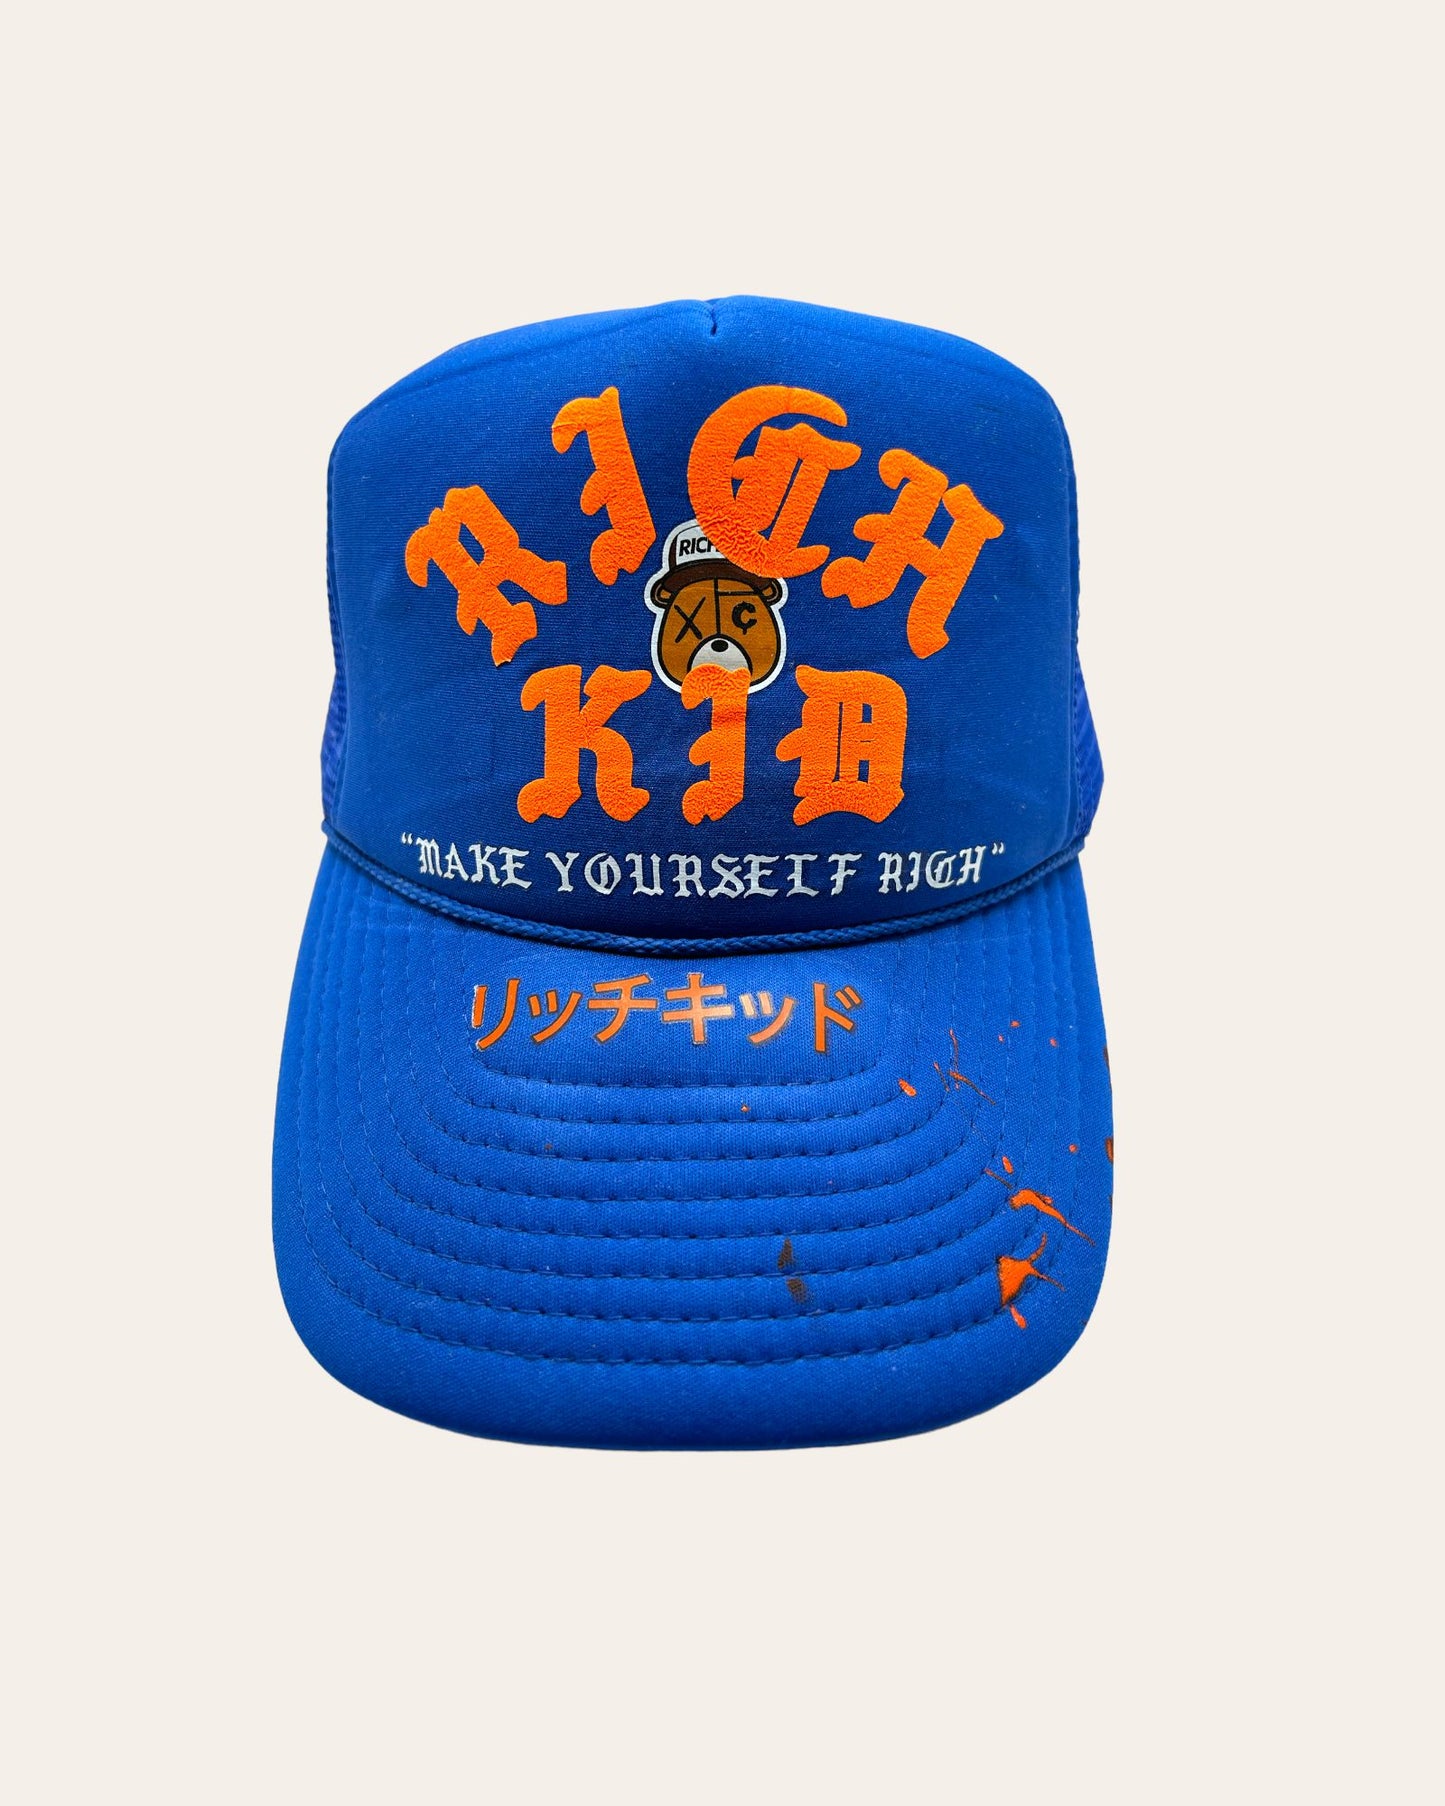 RichKid "MYSR" Trucker Hats